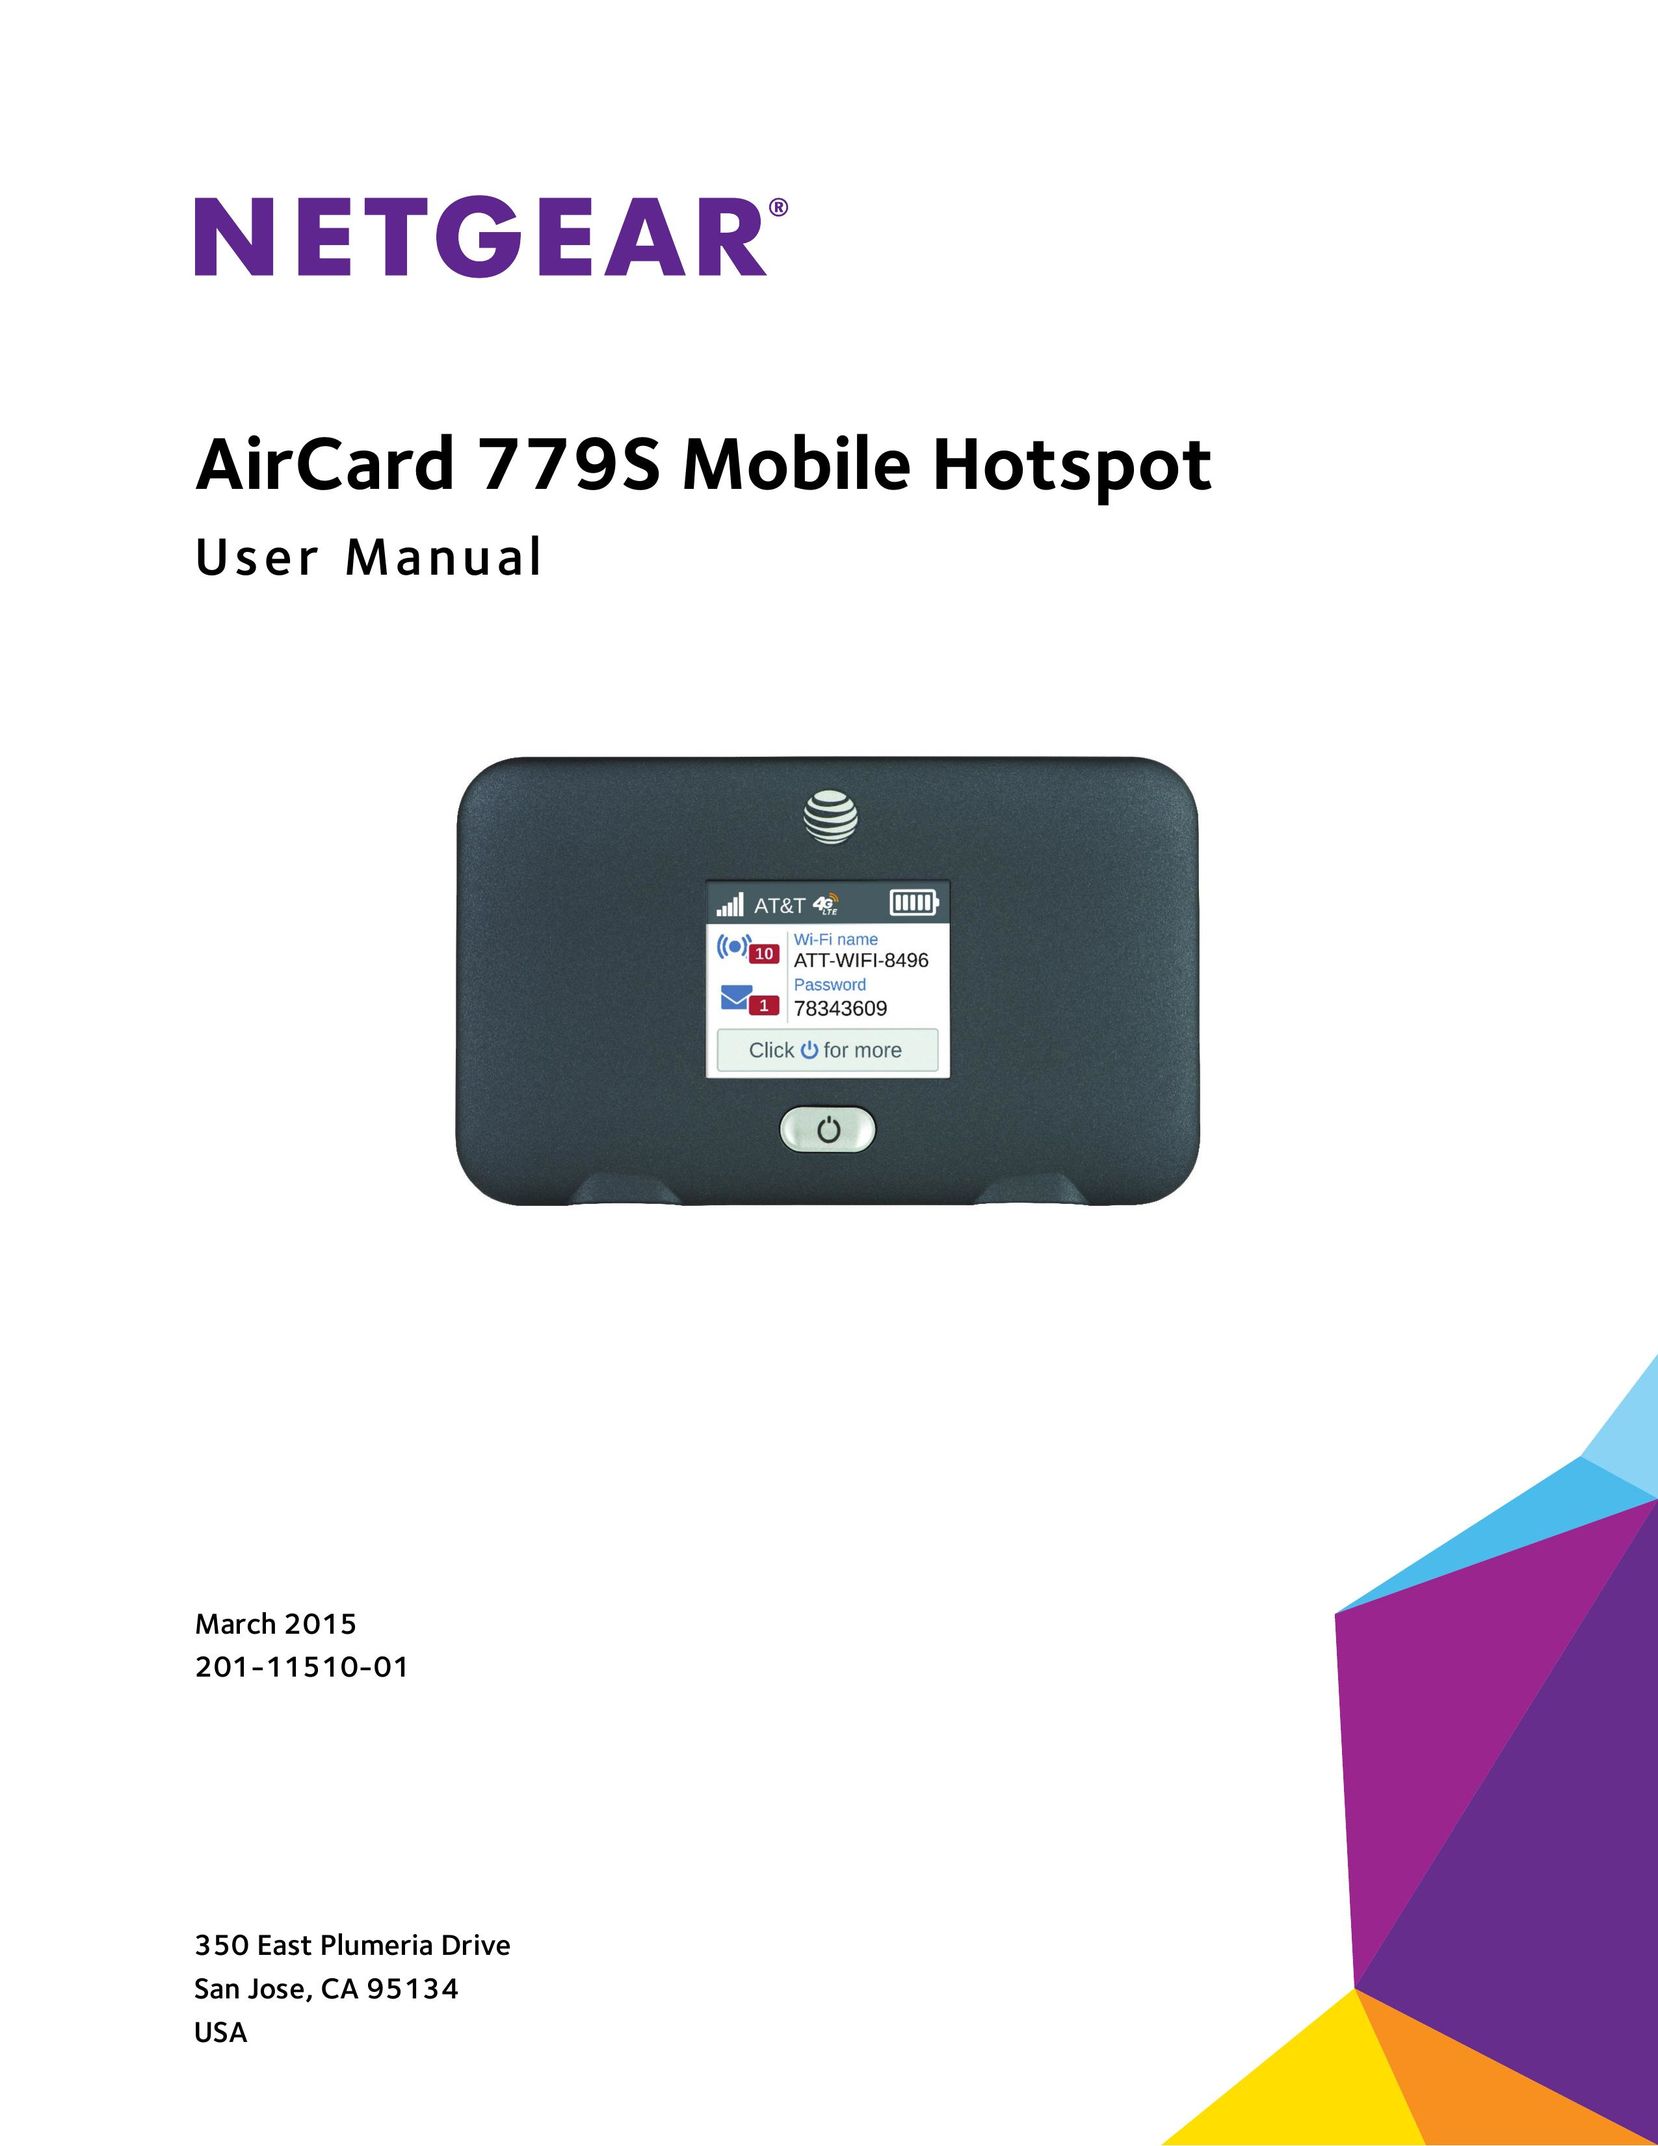 NETGEAR 779S Network Card User Manual